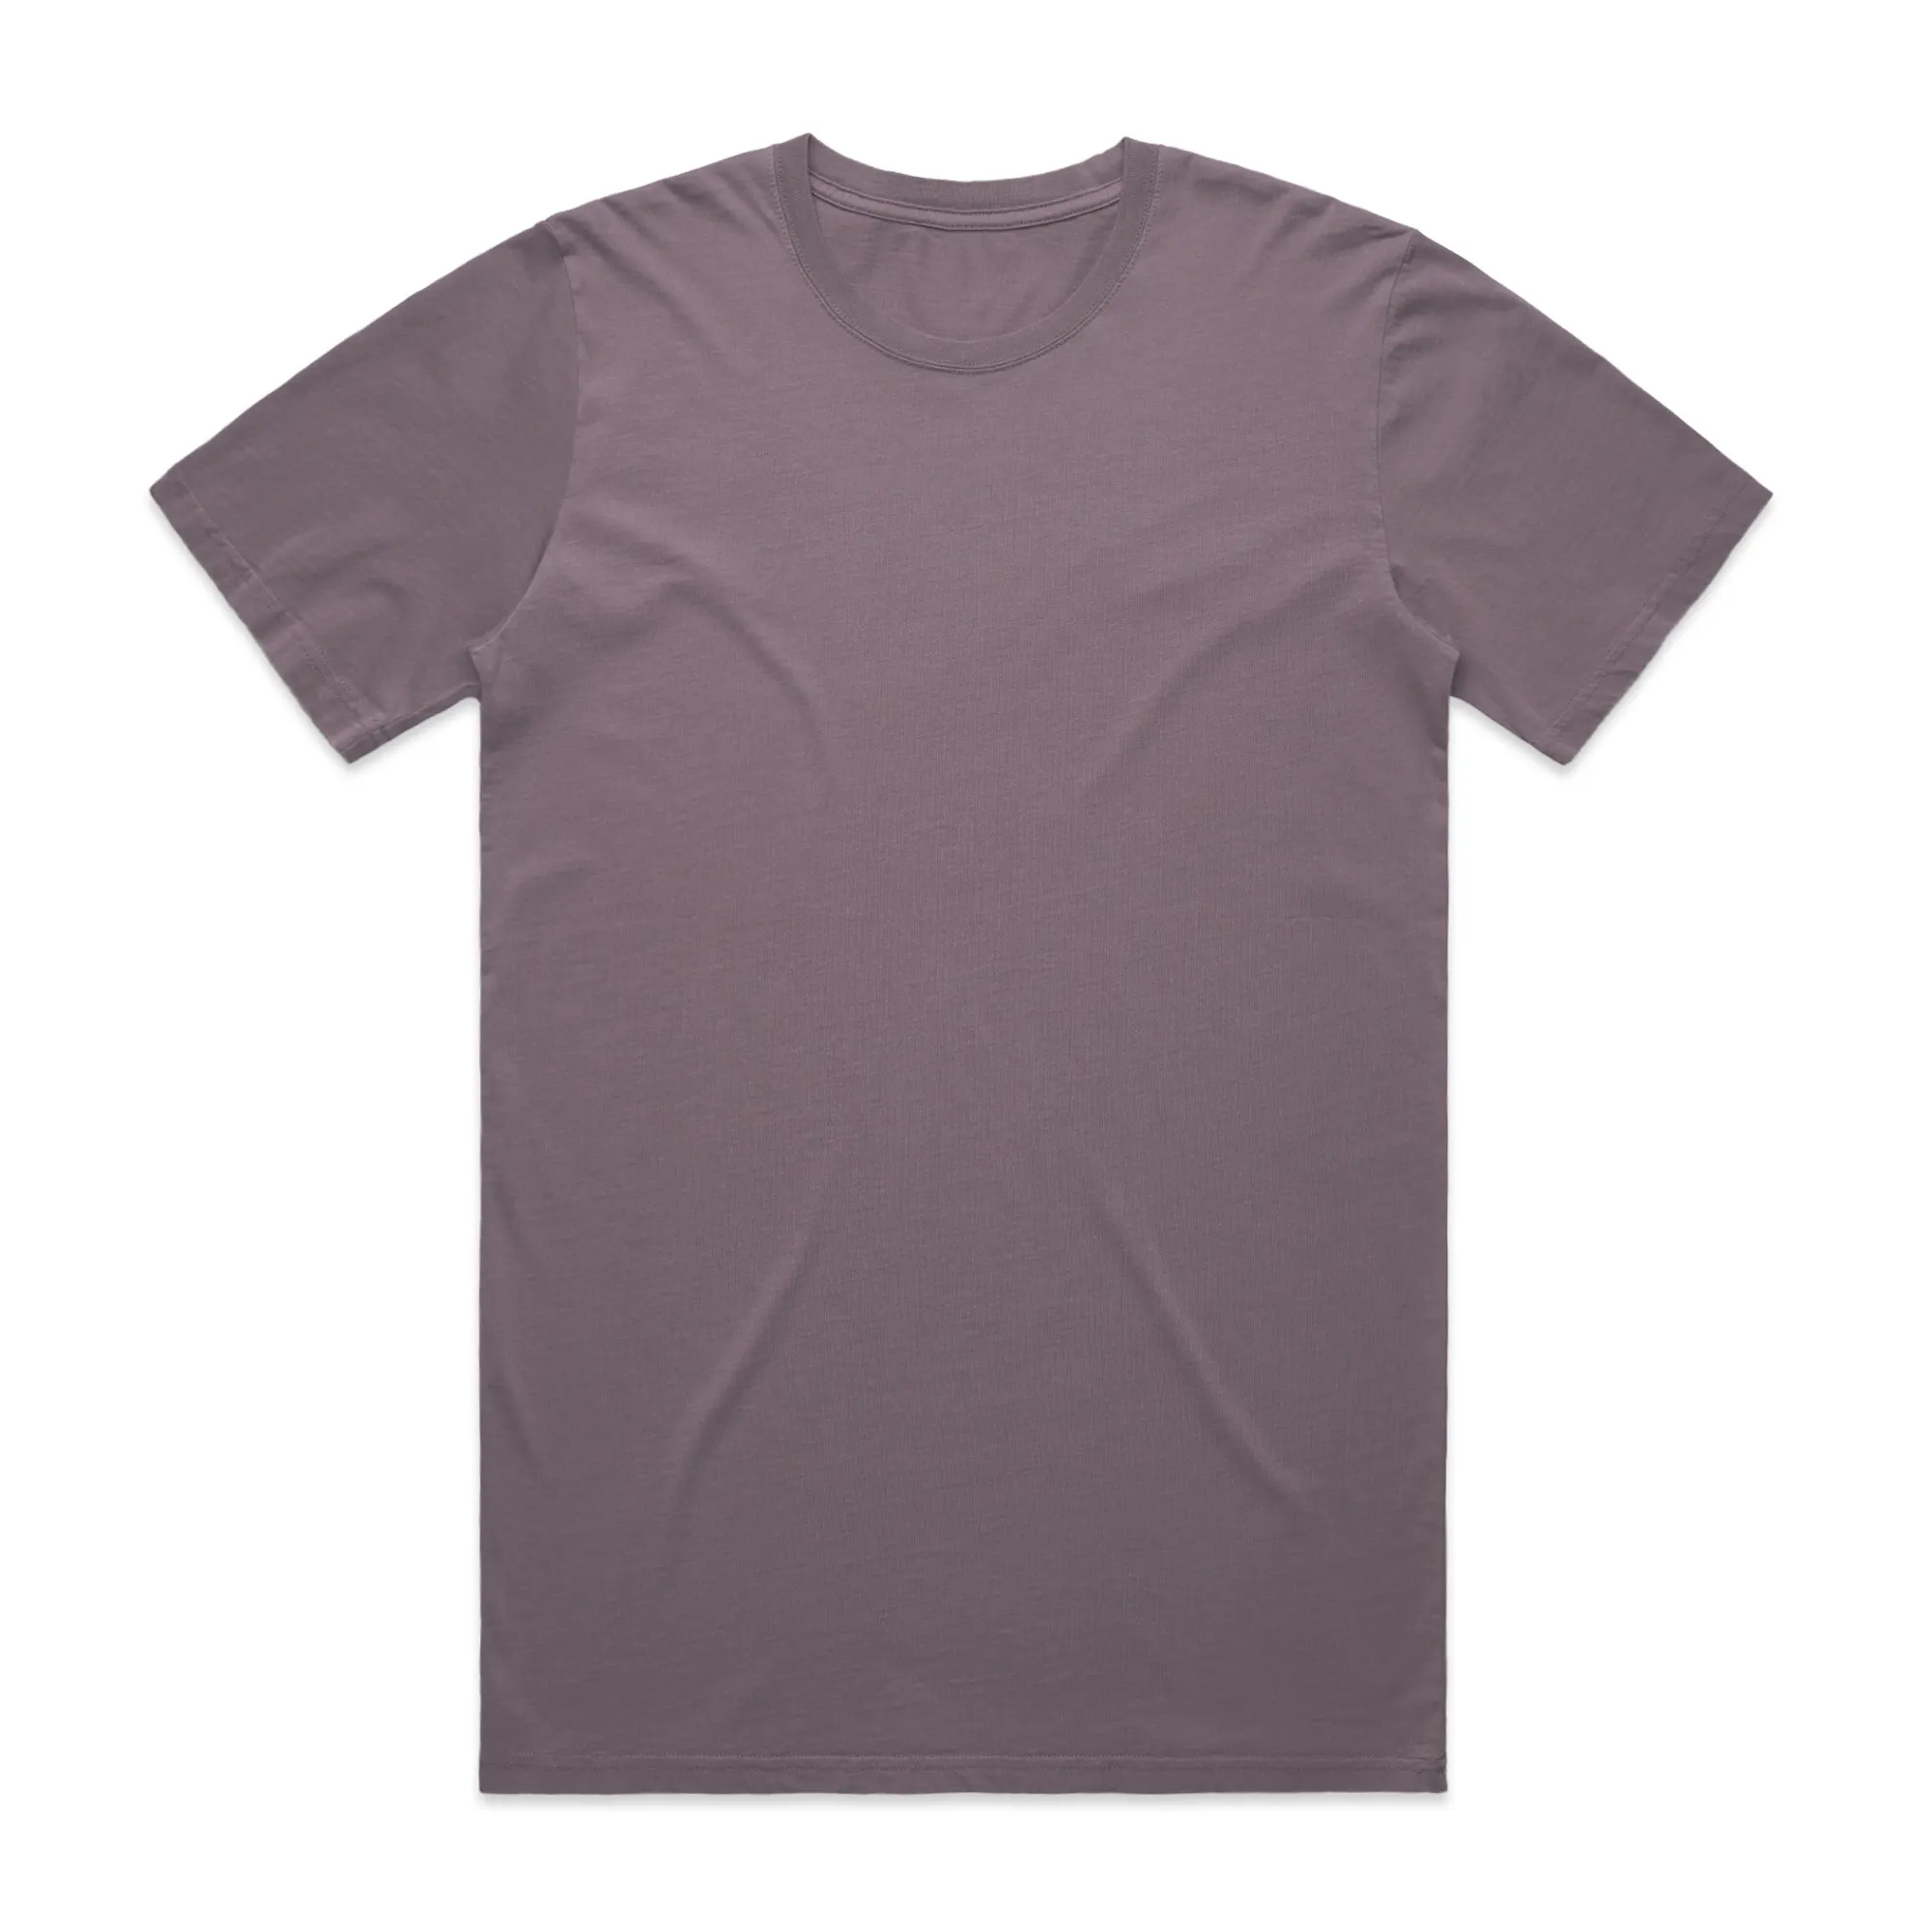 20MOQ 100% pamuk klasik rahat yuvarlak boyun kısa kollu örme özel T-shirt düz erkek T shirt